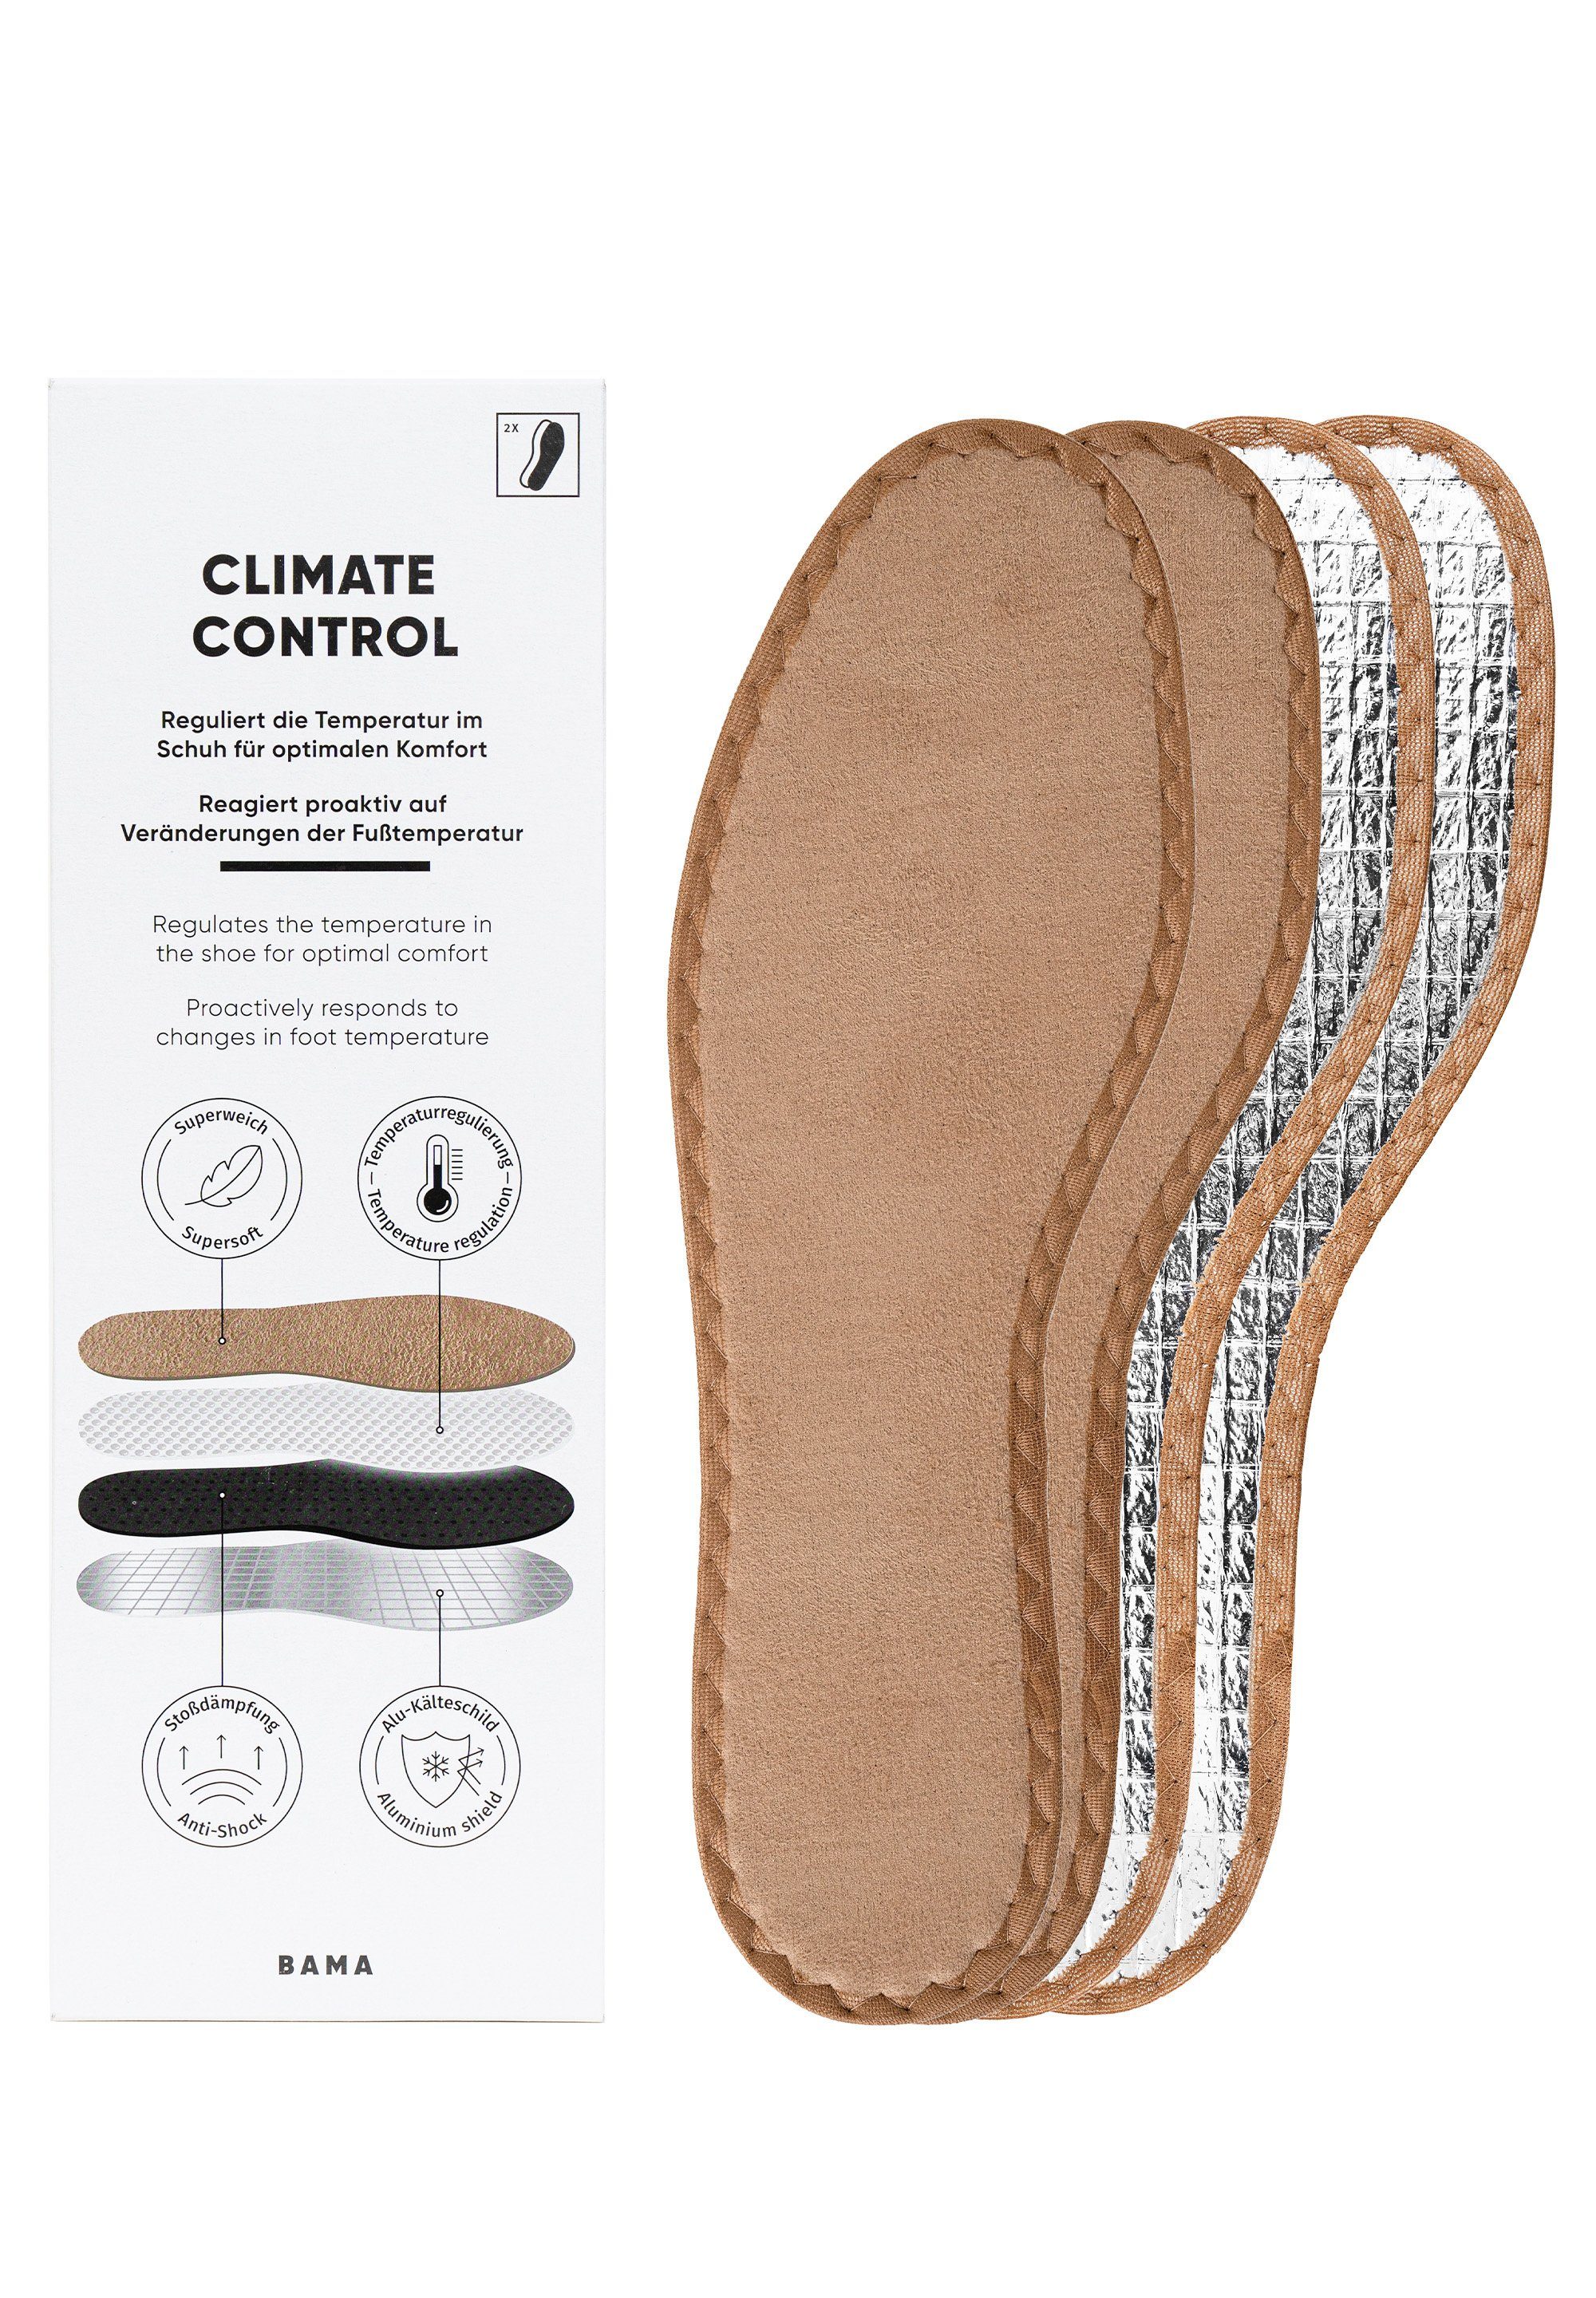 BAMA Pack, und Einlegesohlen Climate 2er wärmespeichernde wärmende Schuhsohle BAMA Group - Doppelpack, Control temperaturregulierende Sohle